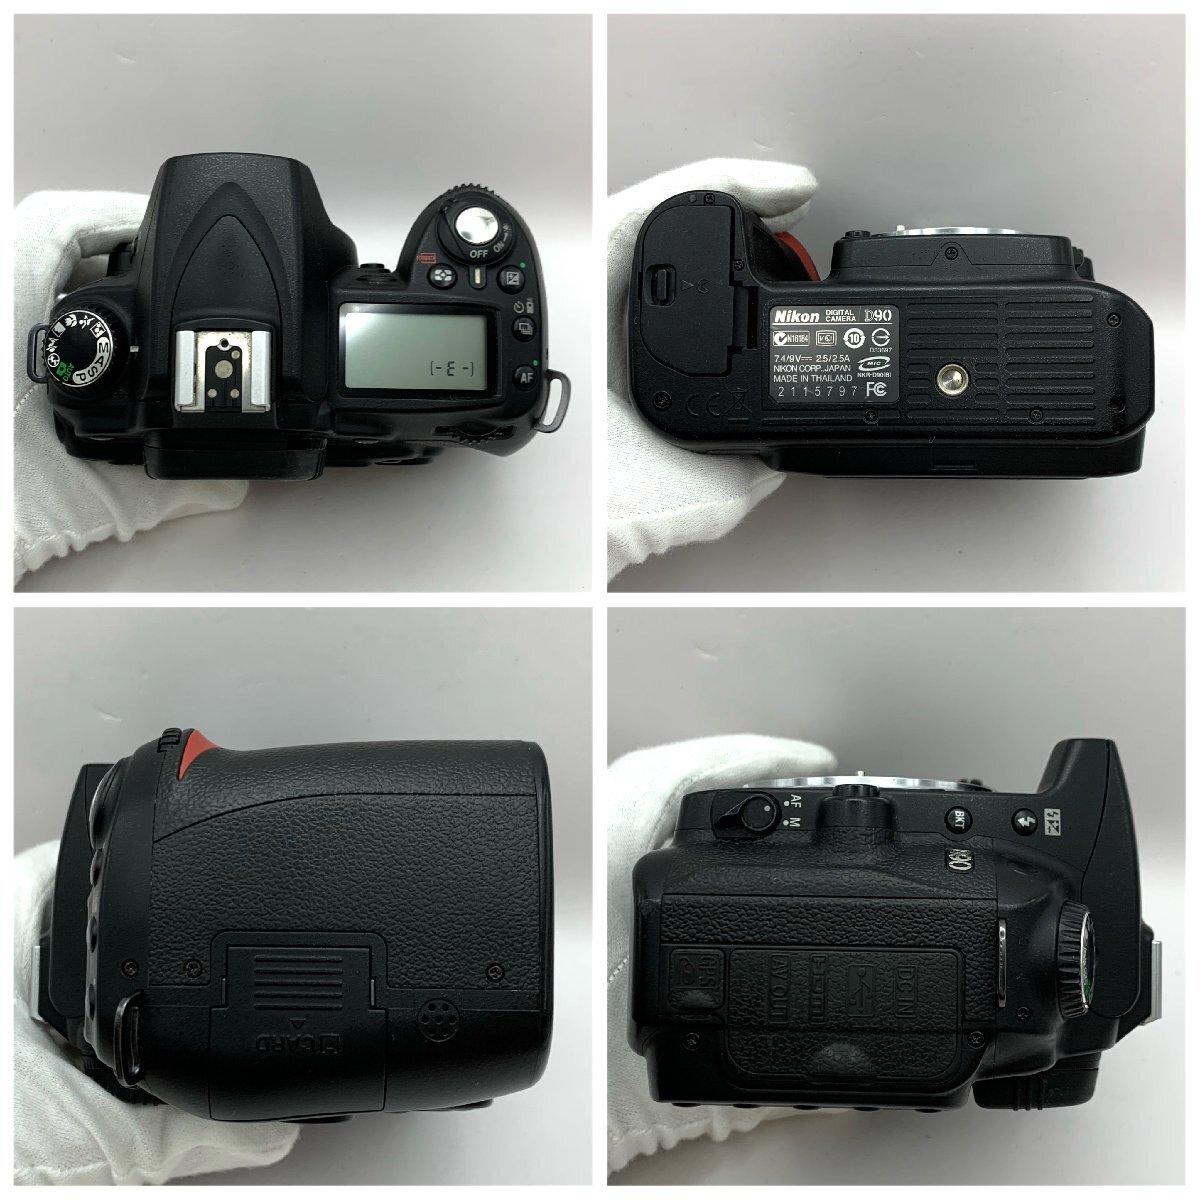 1 jpy ~/Nikon/ Nikon /D90/ accessory attaching /TAMRON/AF/70-300mm/F4-5.6/LD/ digital single-lens / digital camera / shutter OK/ electrification verification settled / Junk /I223